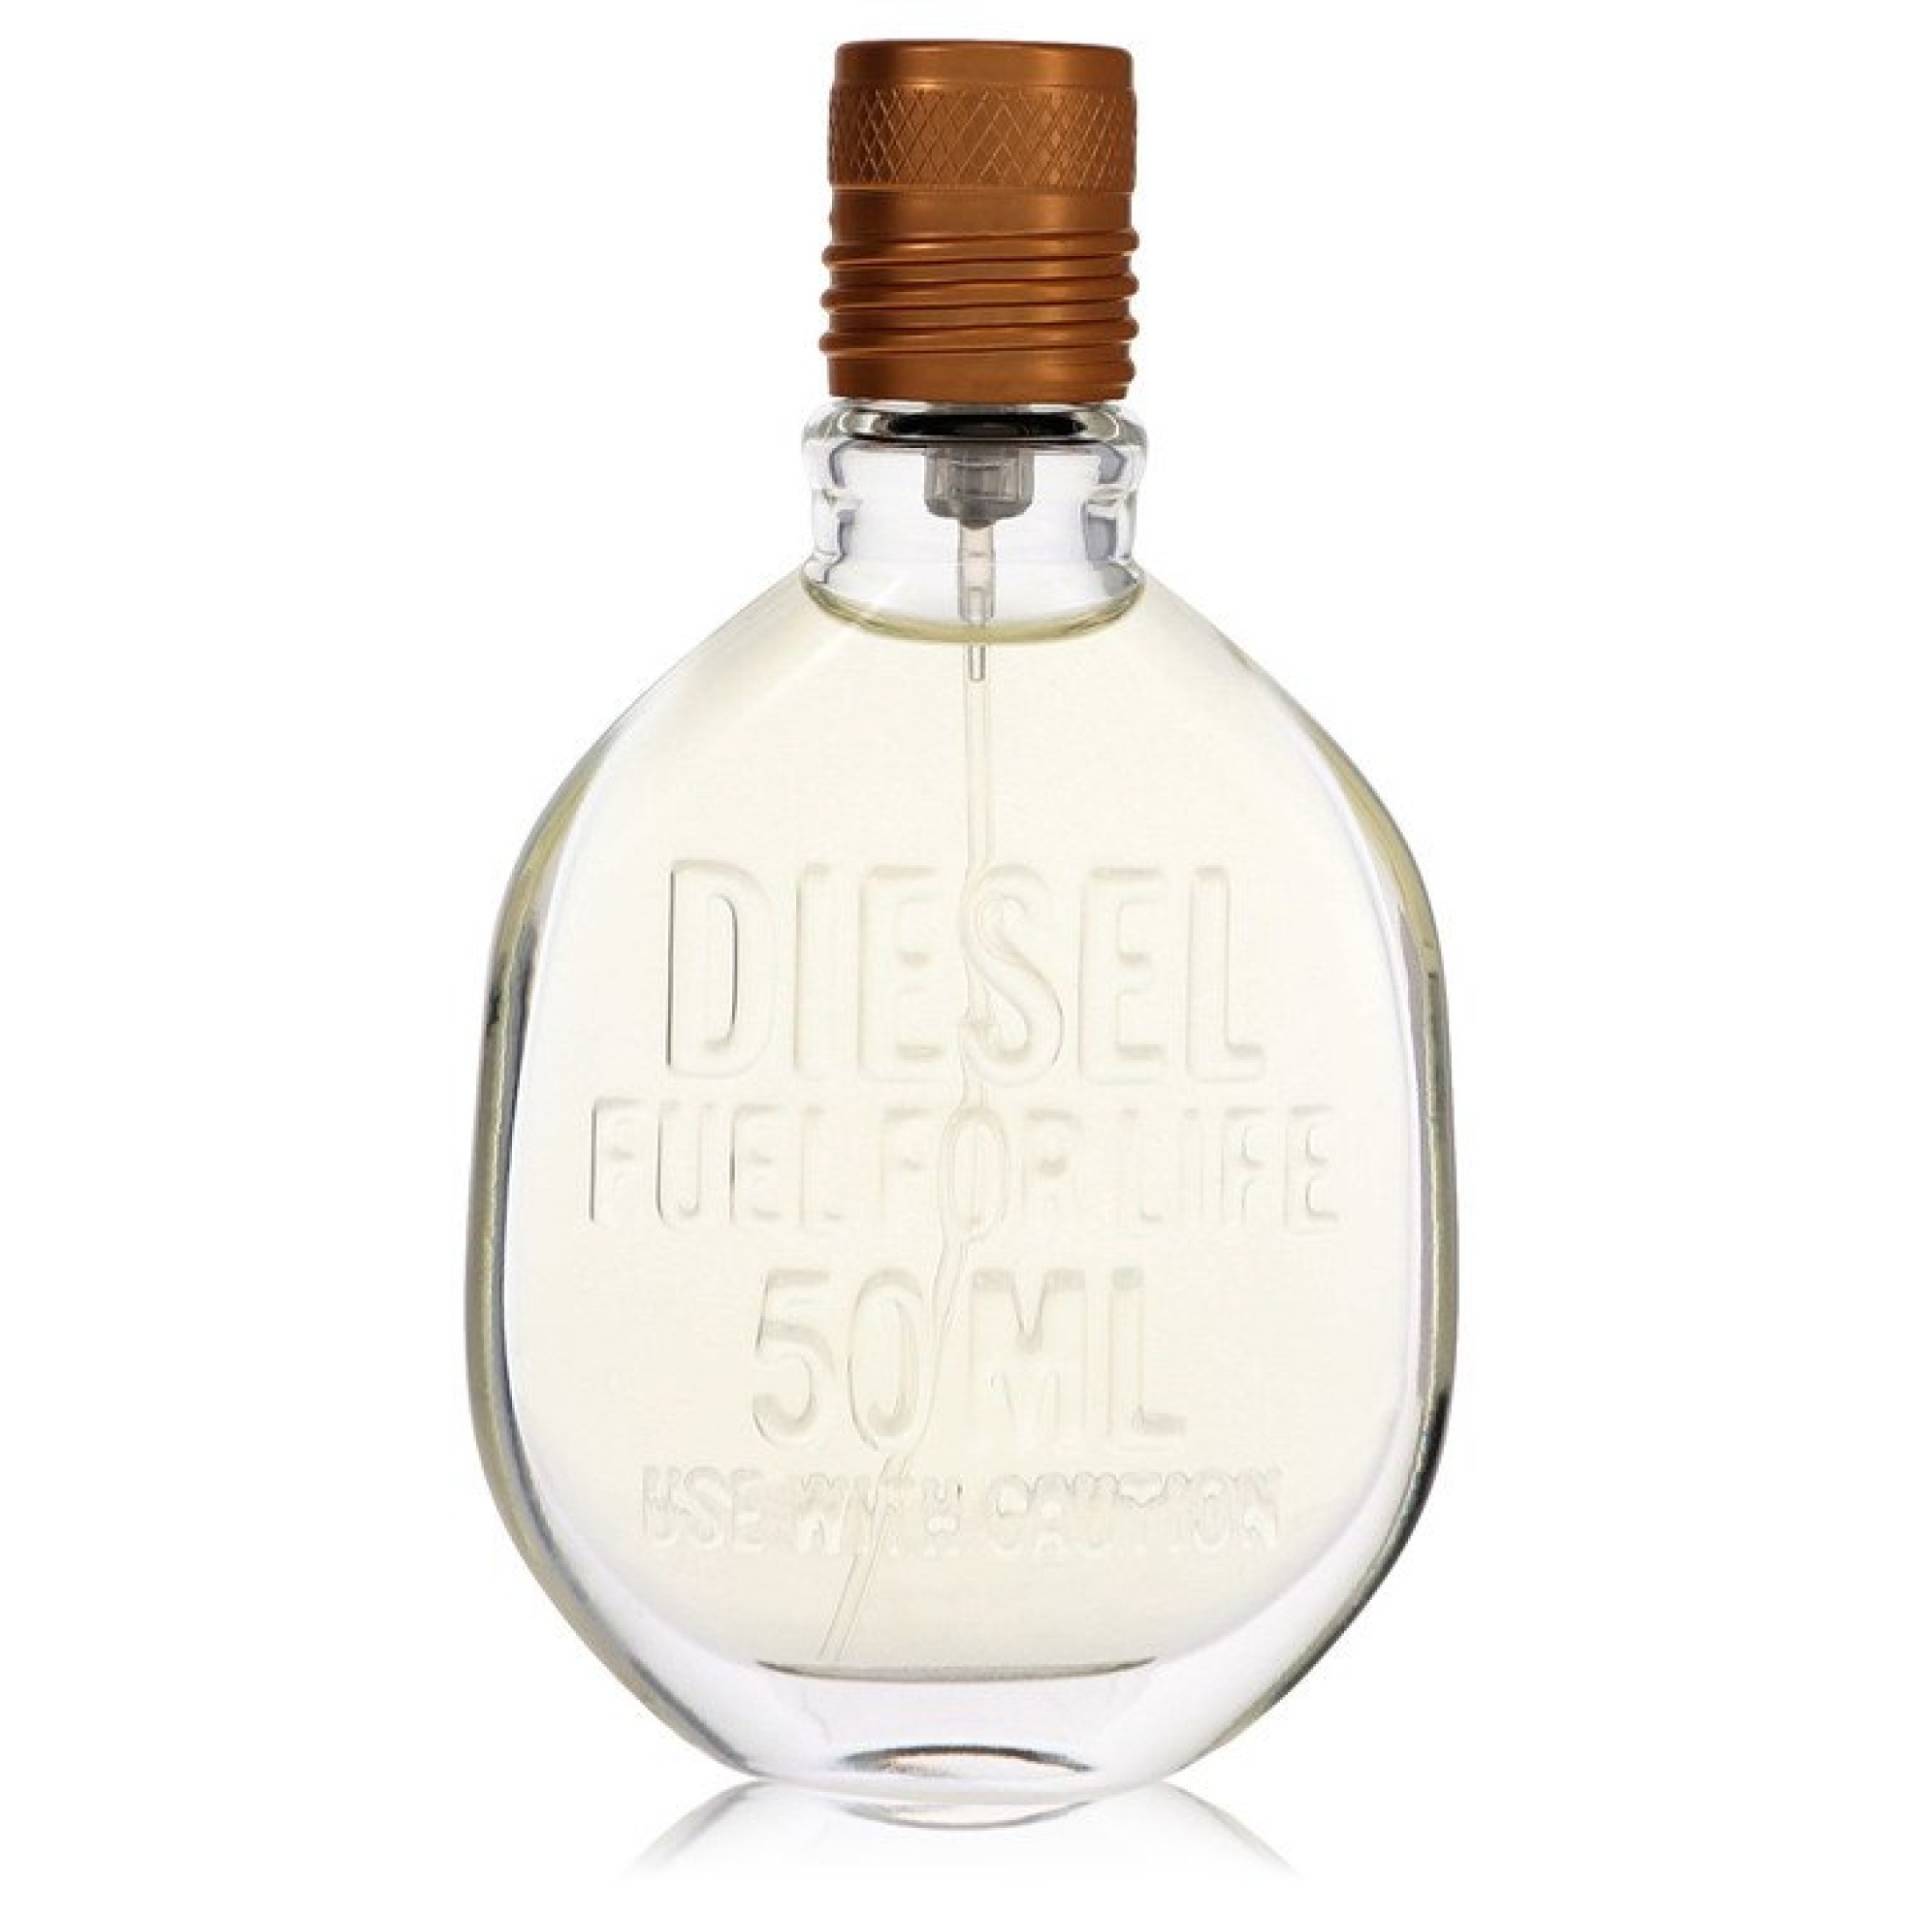 Diesel Fuel For Life Eau De Toilette Spray (unboxed) 50 ml von Diesel